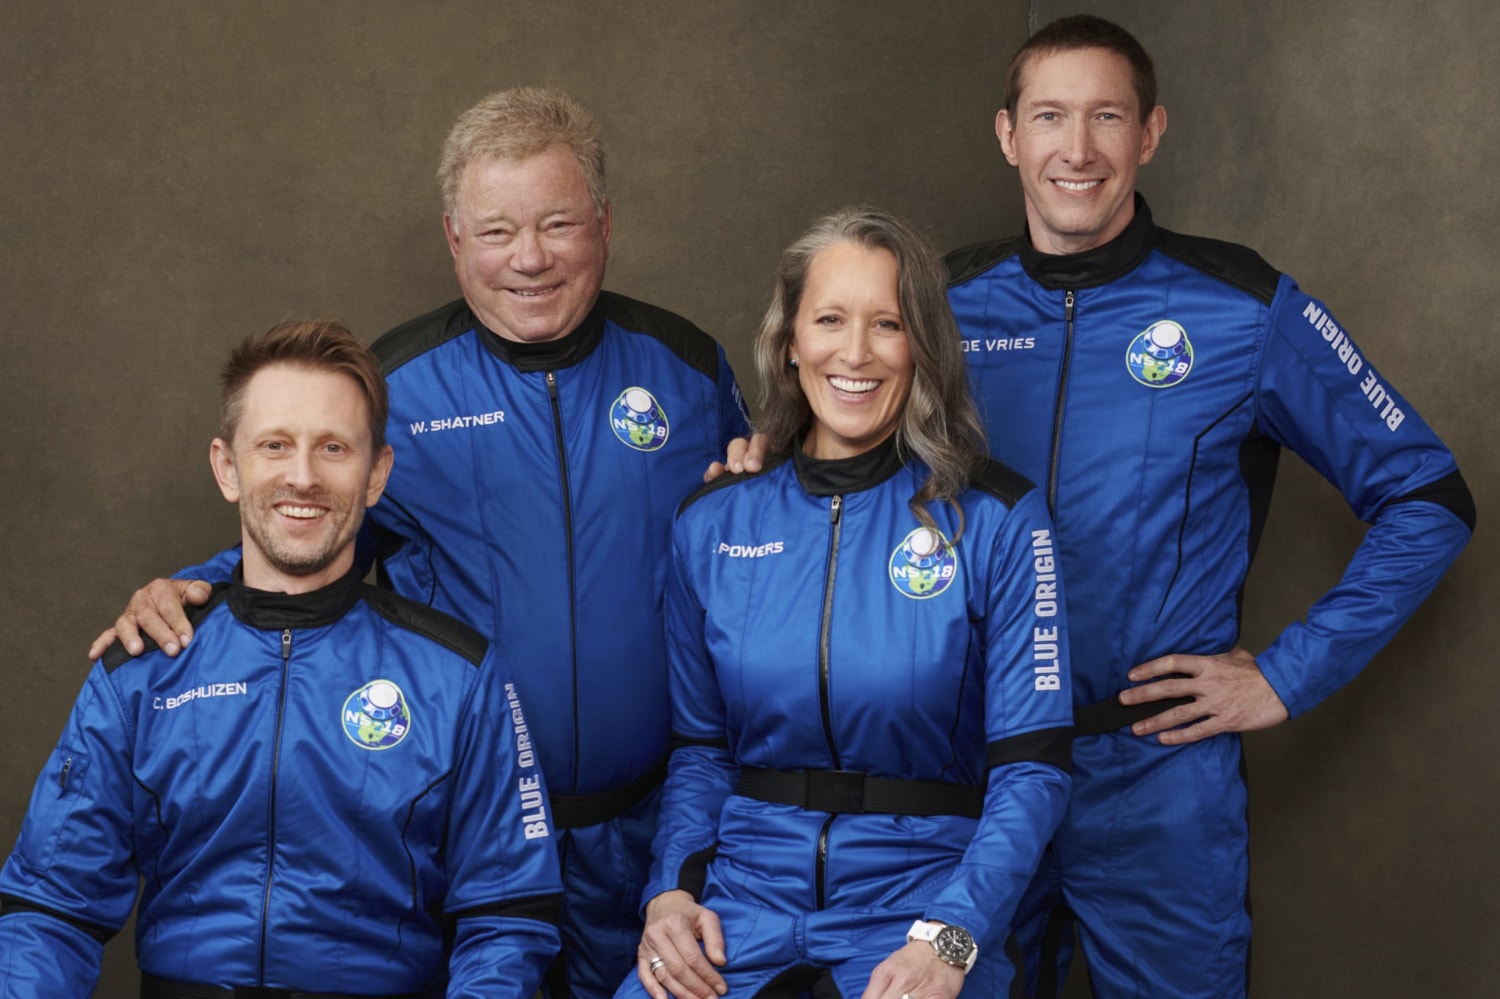 William Shatner set to launch on Blue Origin New Shepard flight